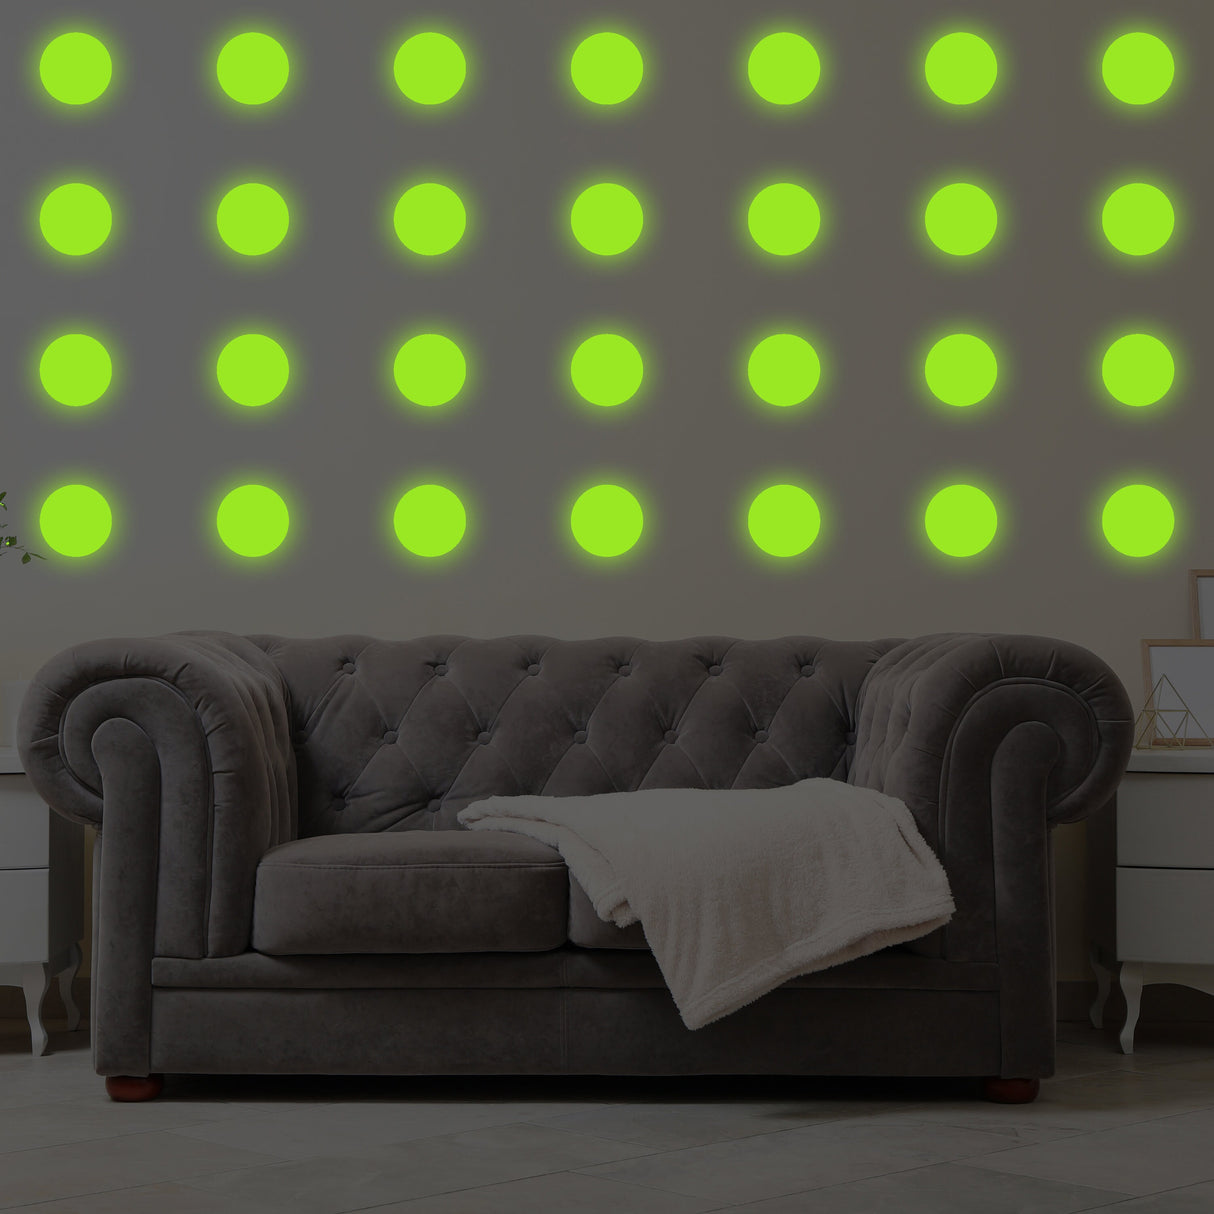 40x Glow In Dark Dots Wall Stickers - Luminous Ceiling Sticker Decals